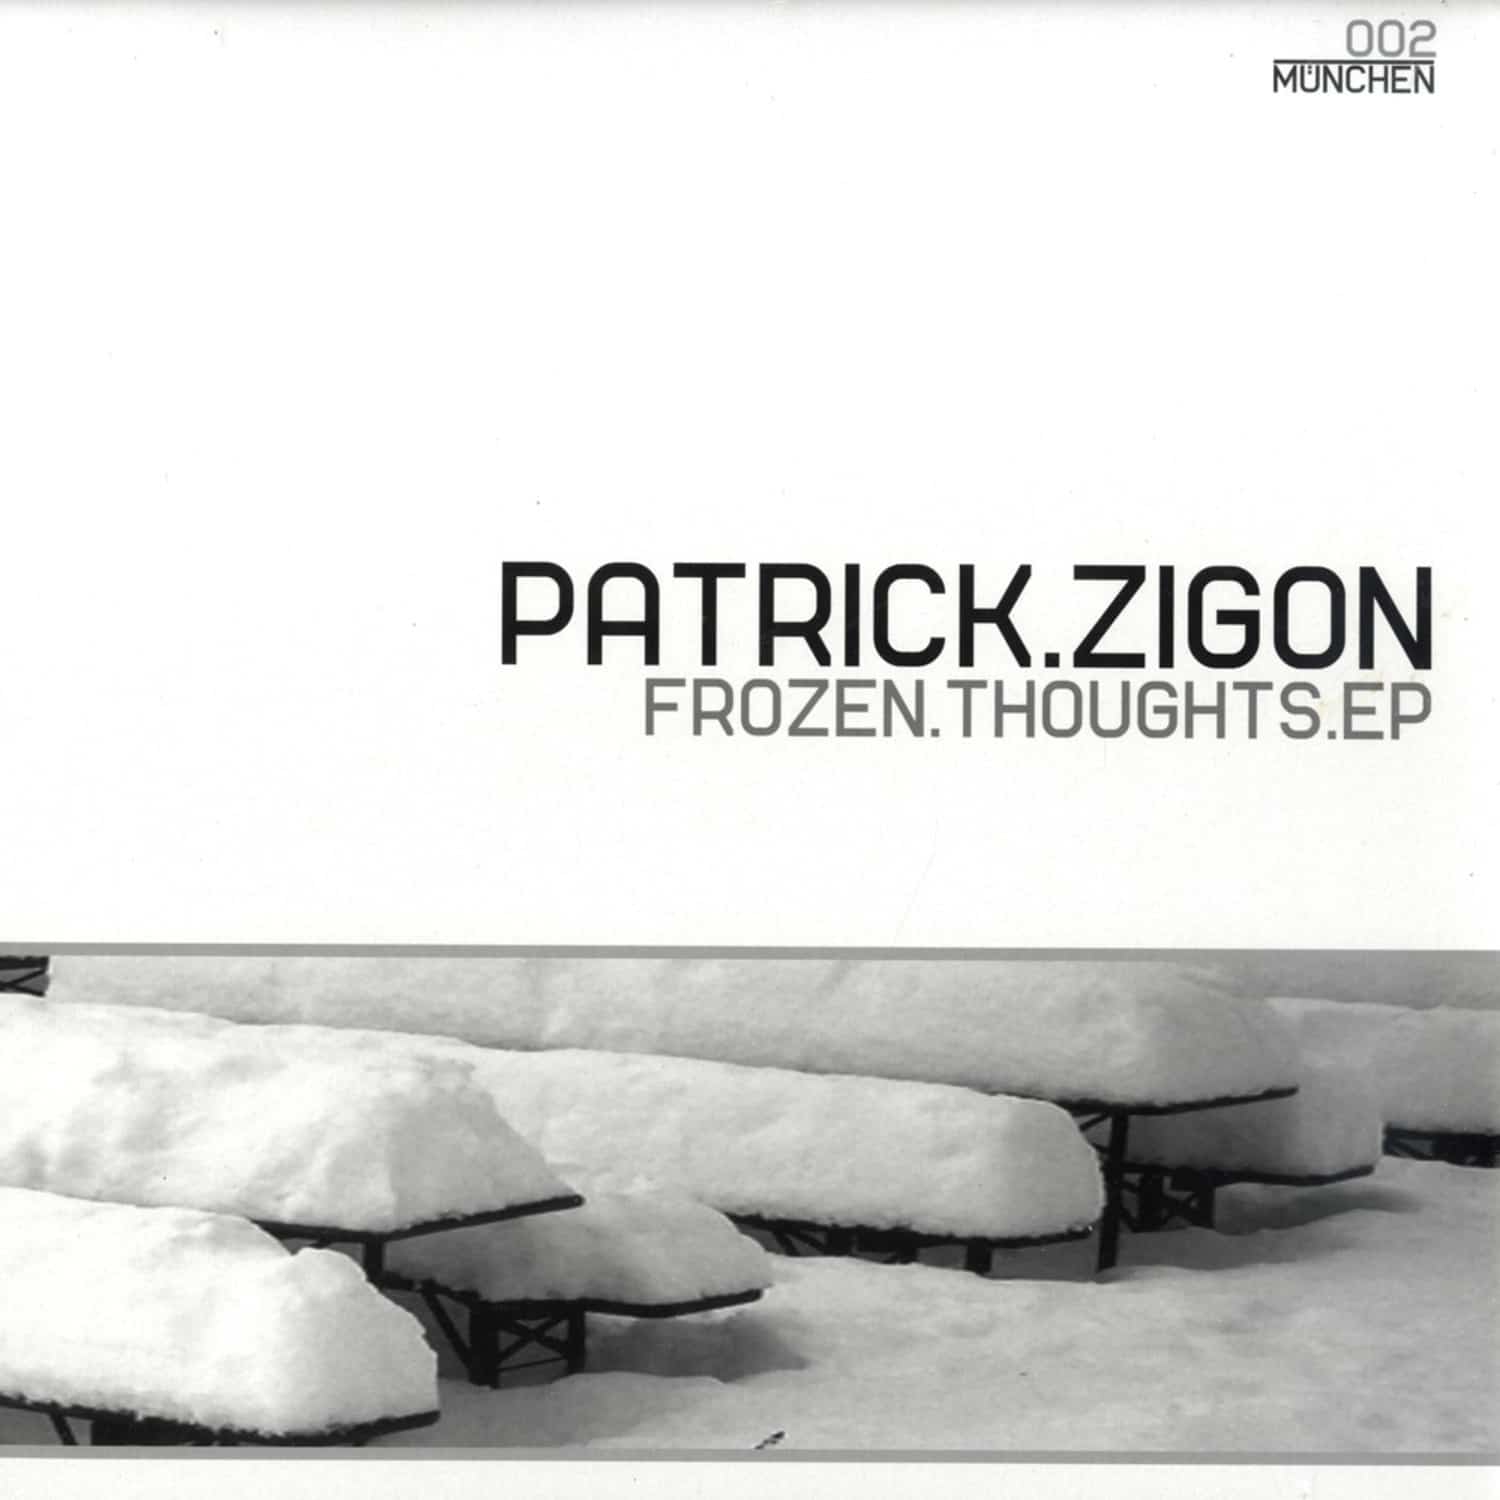 Patrick Zigon - FROZEN THOUGHTS EP